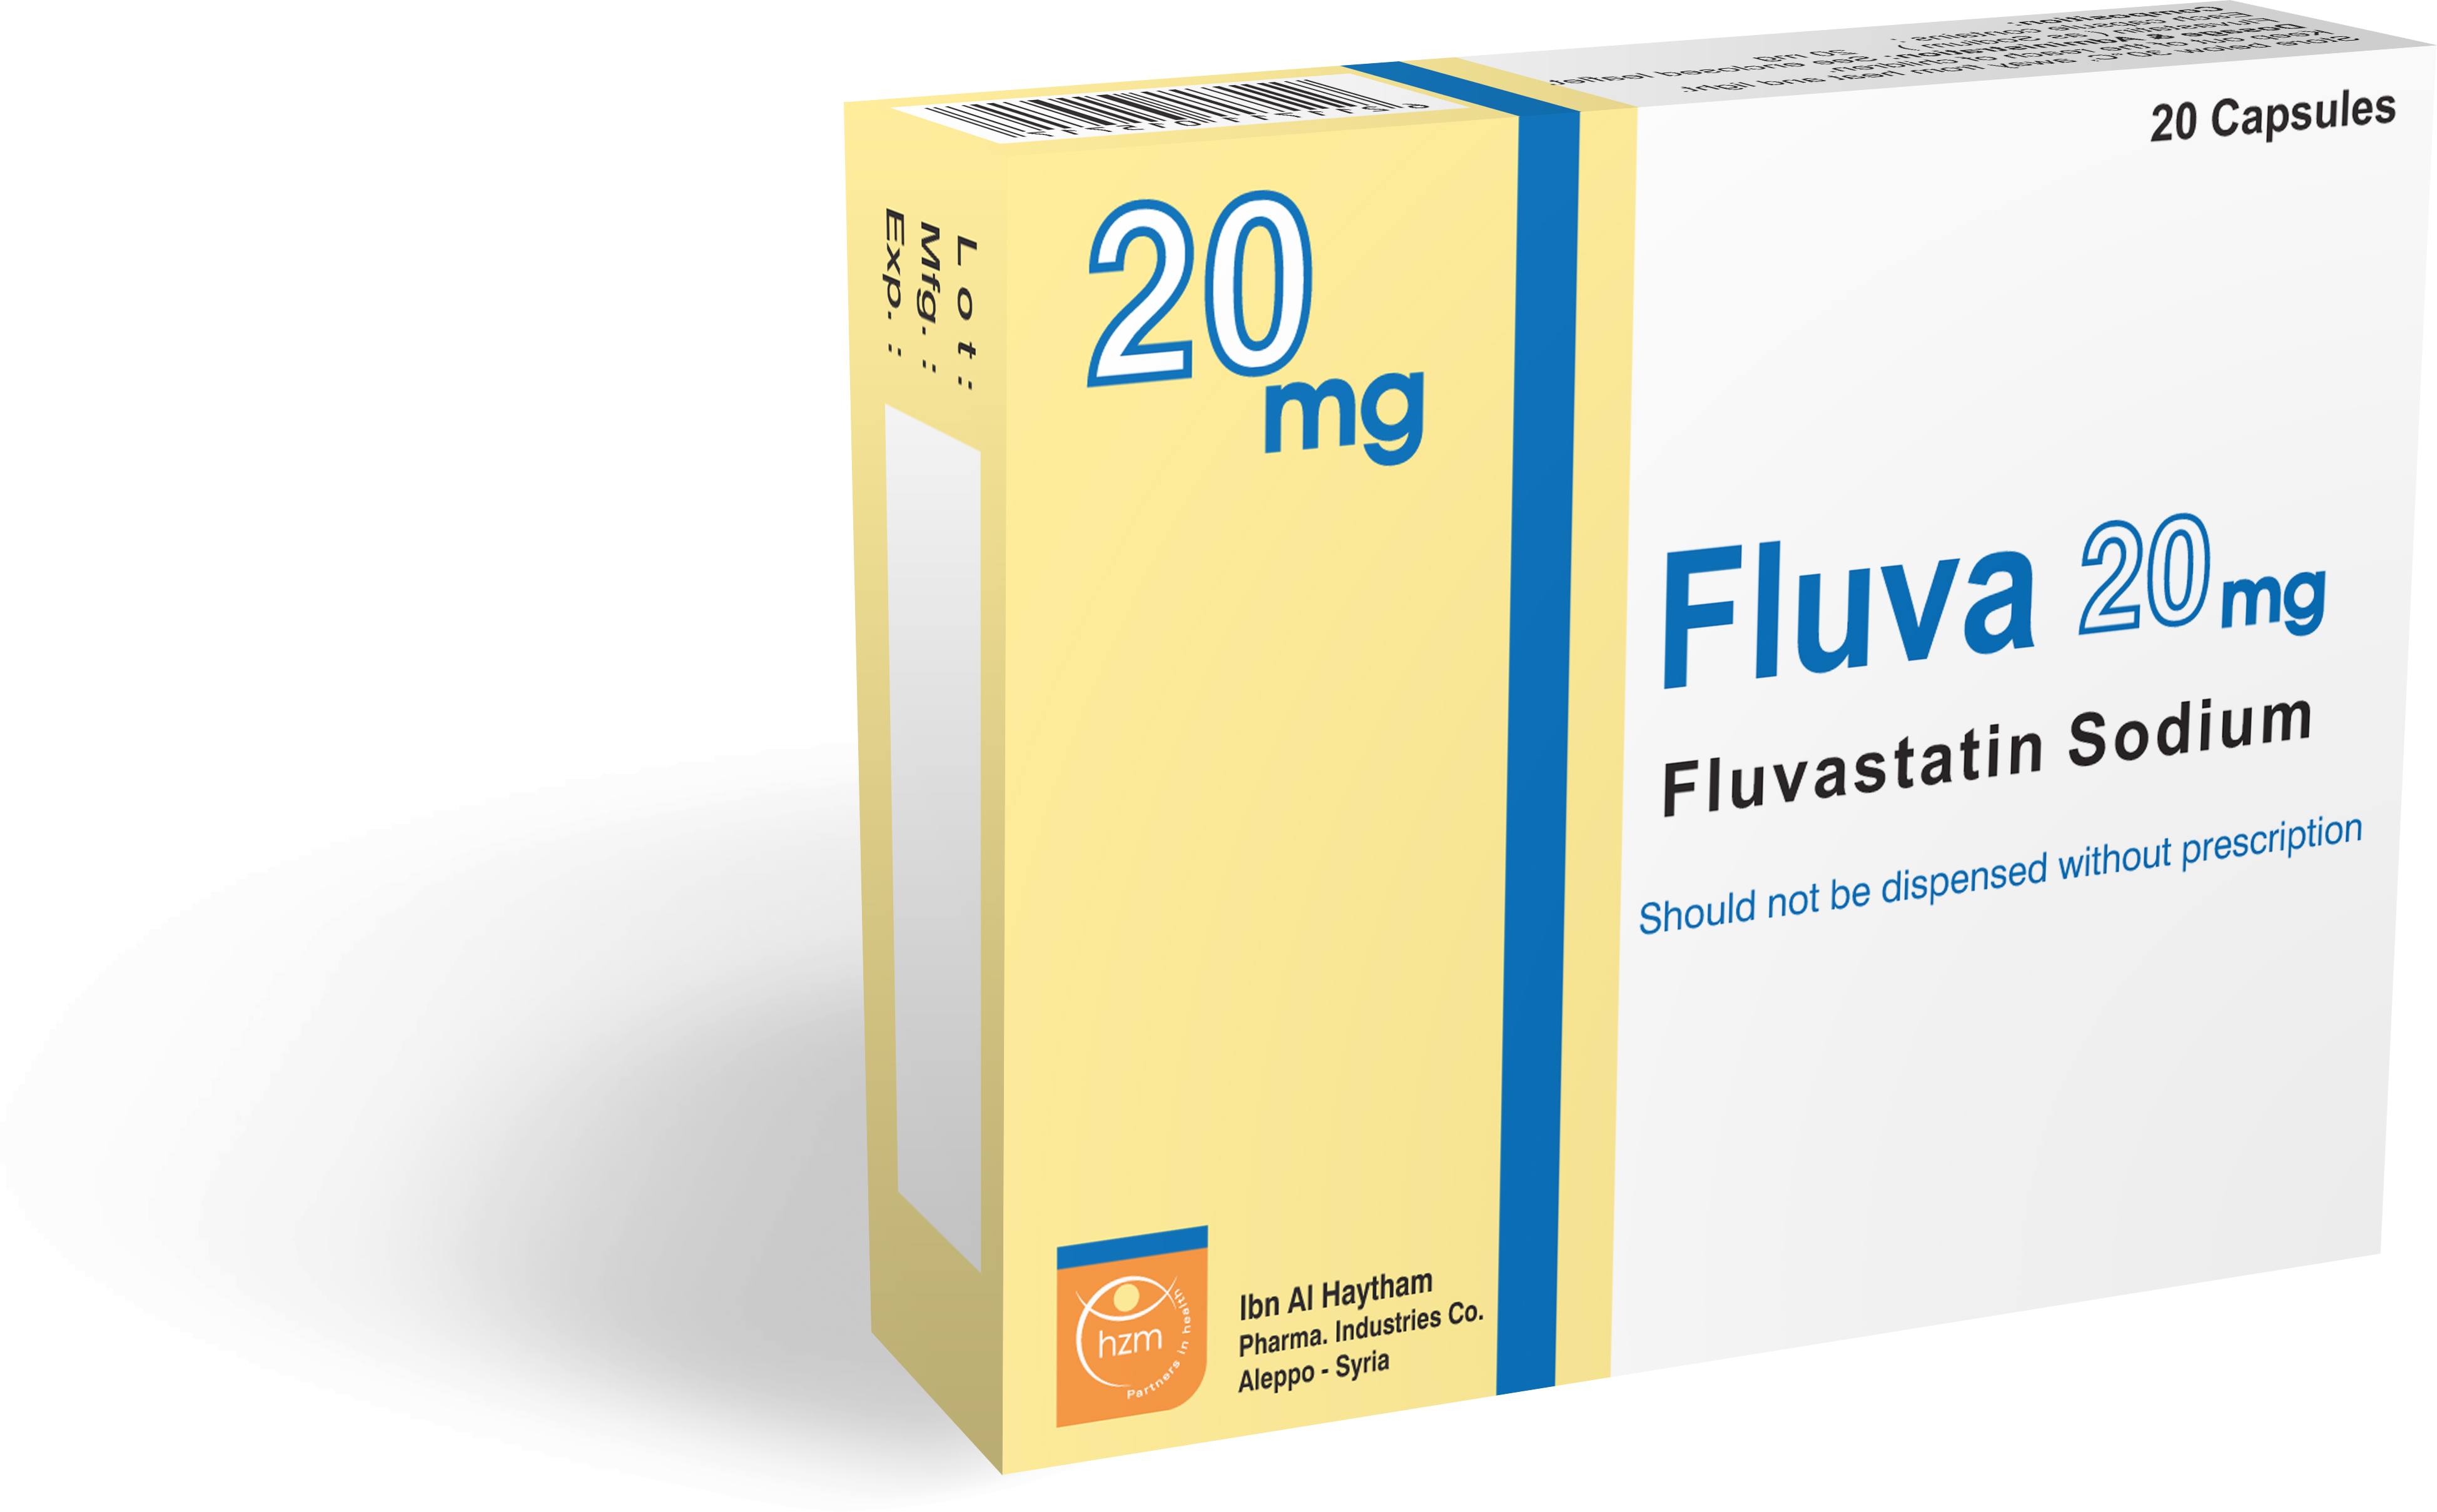 Fluva 20 mg Capsules